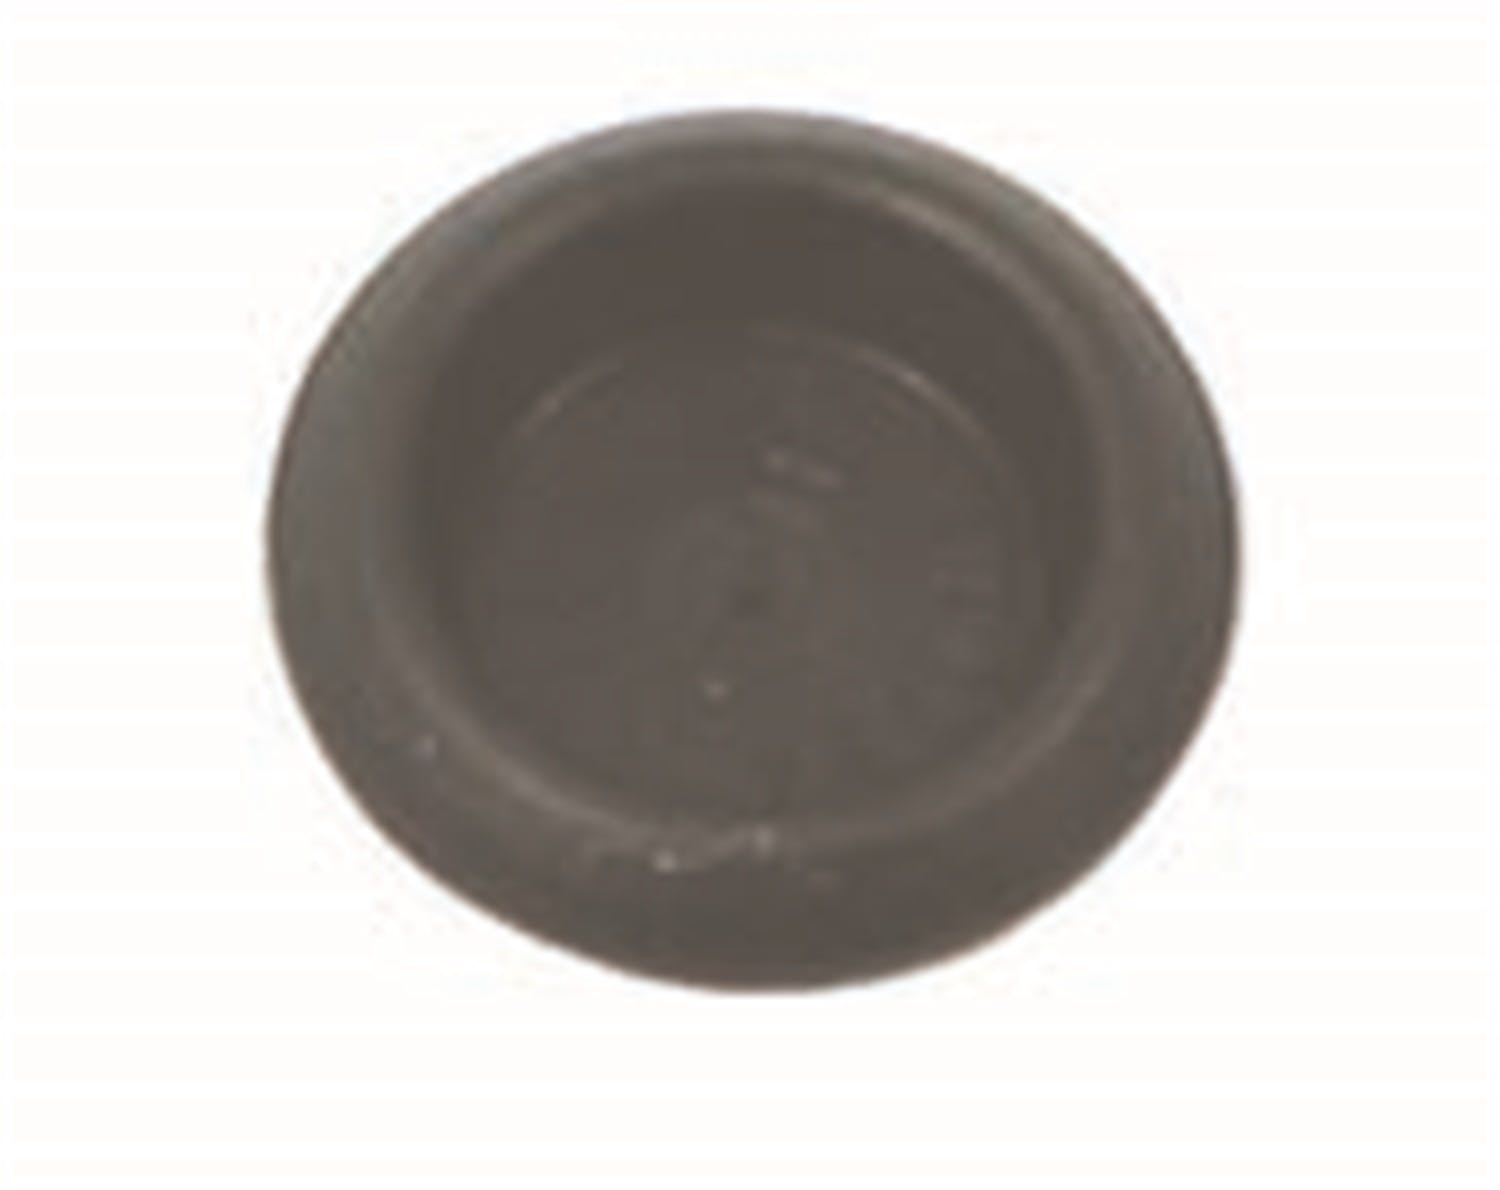 Omix-ADA 12029.19 1-inch Drain Plug for Floor Pan